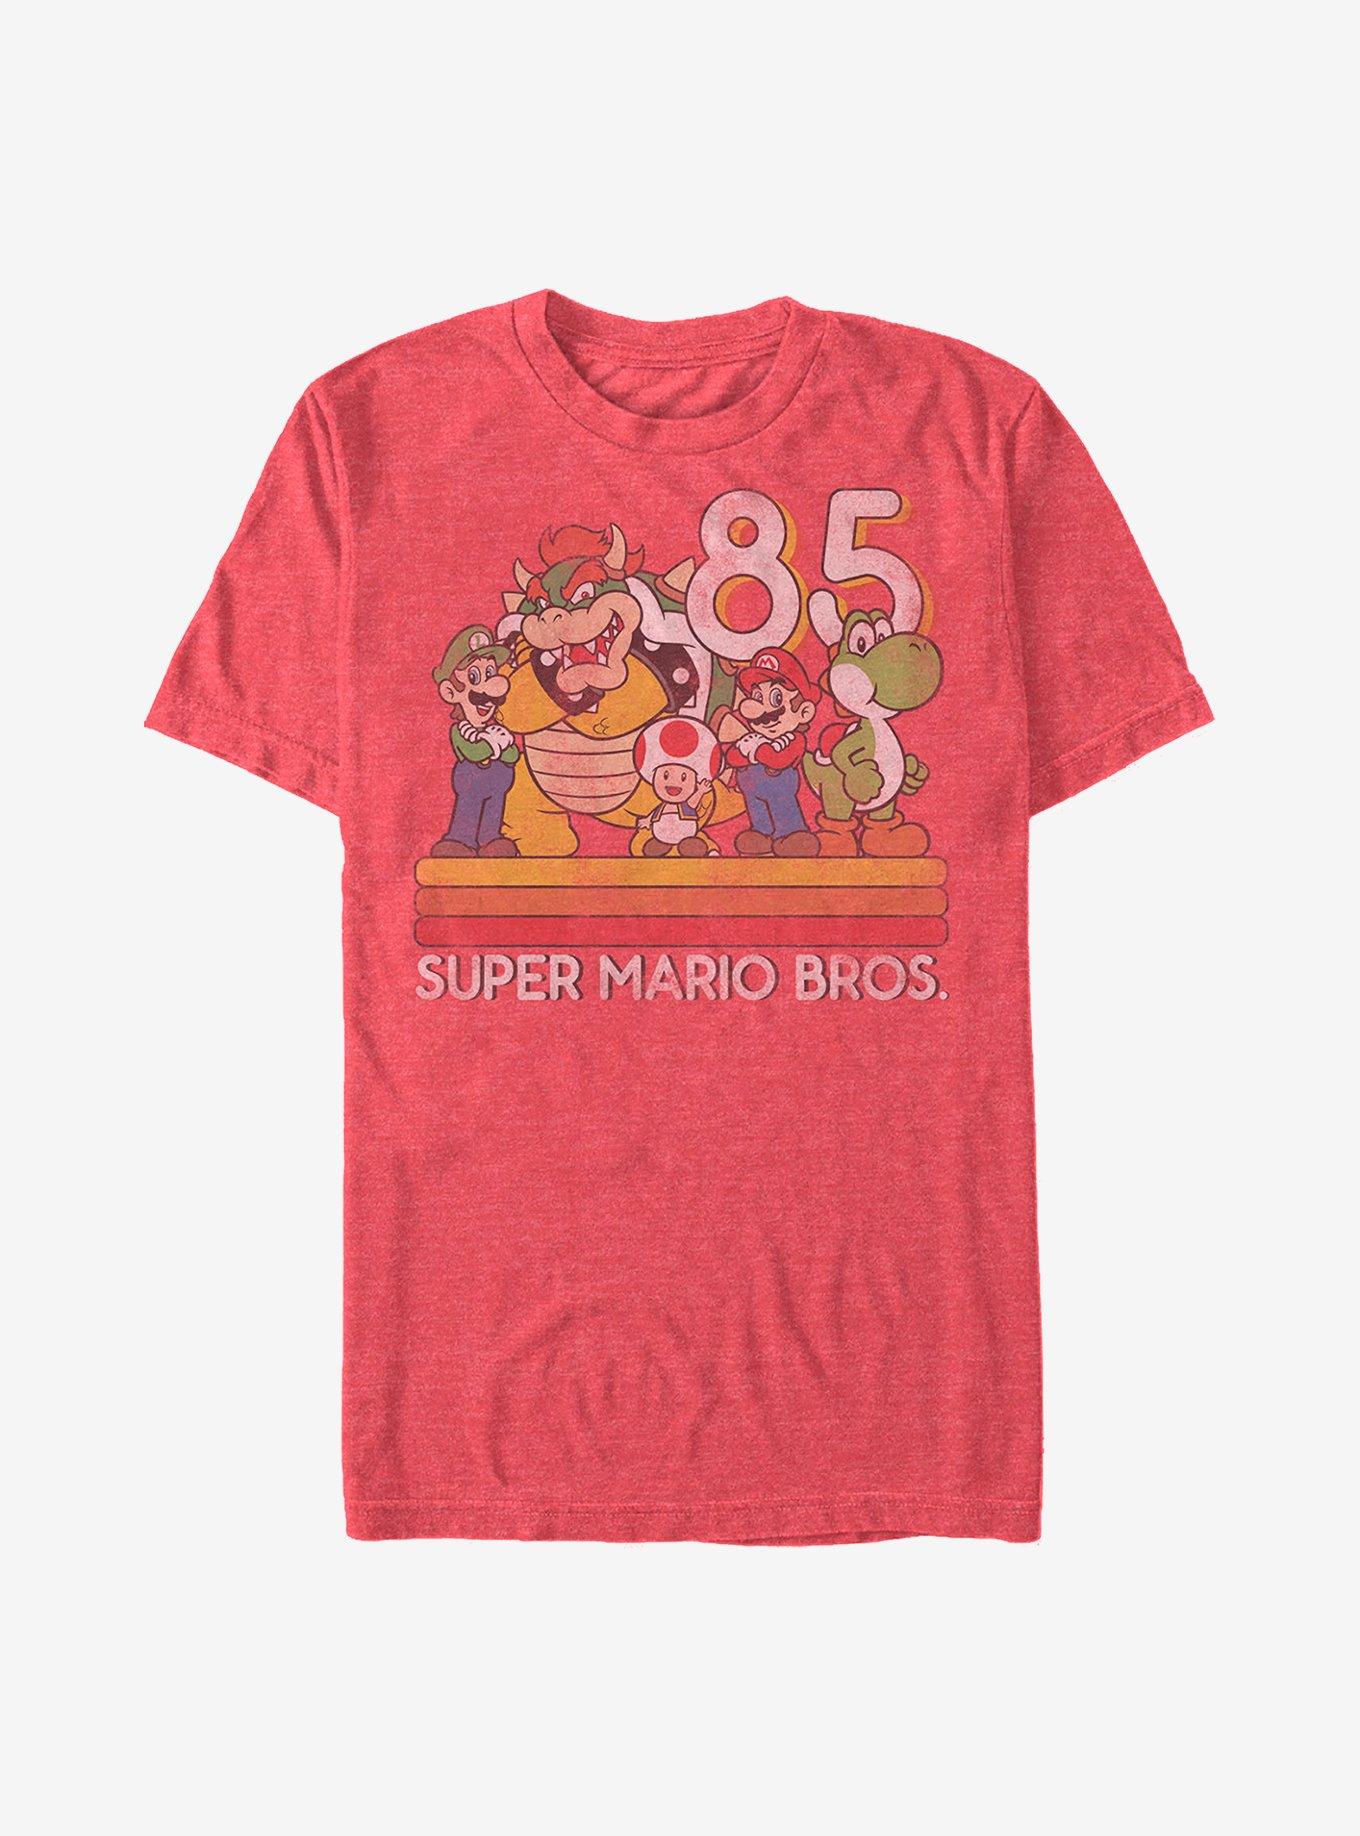 Nintendo Super Mario Bros Group 85 T-Shirt